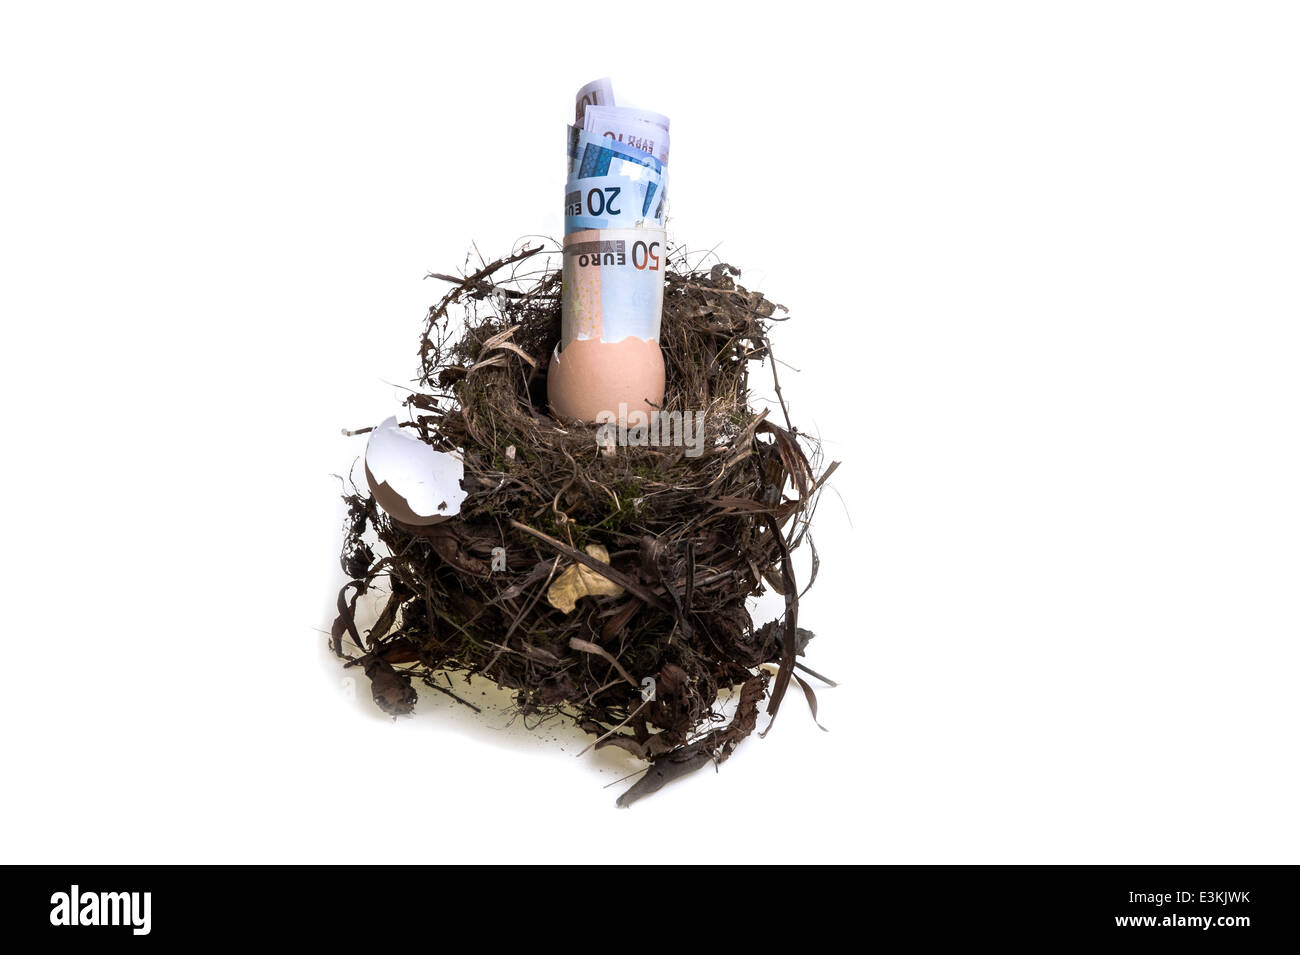 Nest Egg Investment savings pension pot Stock Photo